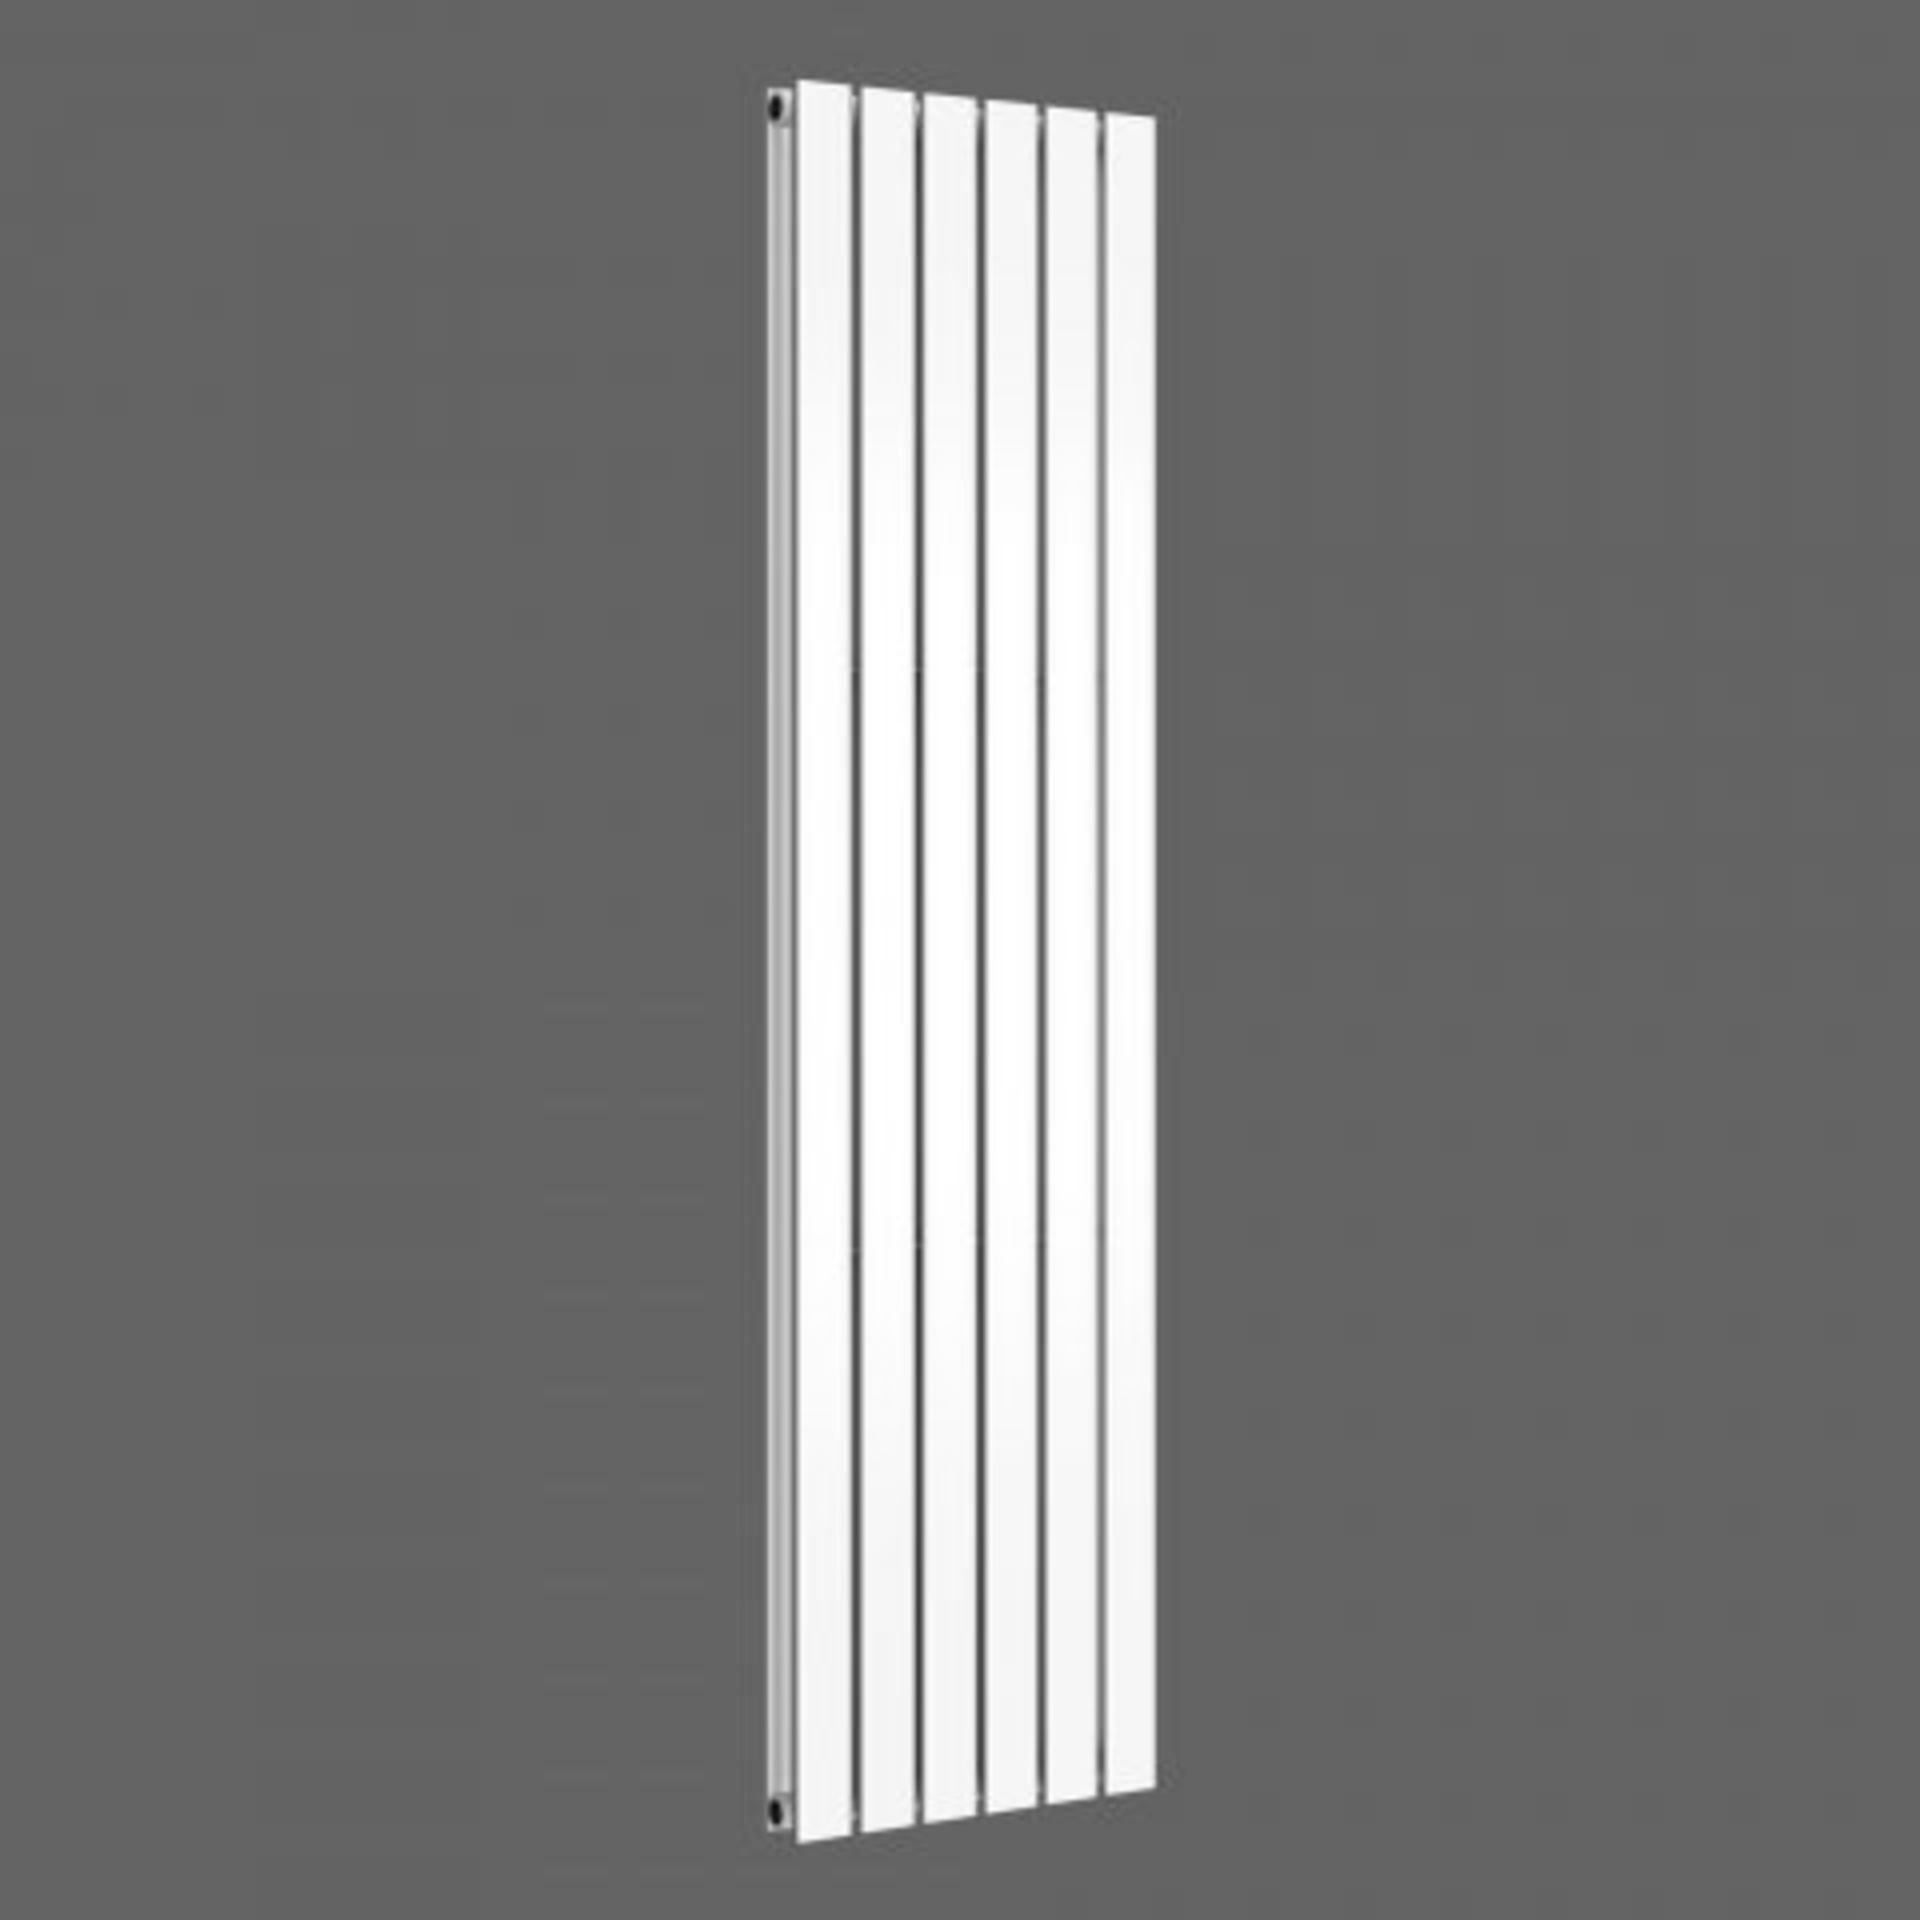 (M120) 1800x452mm Gloss White Double Flat Panel Vertical Radiator - Thera Range. RRP £499.99. - Image 3 of 3